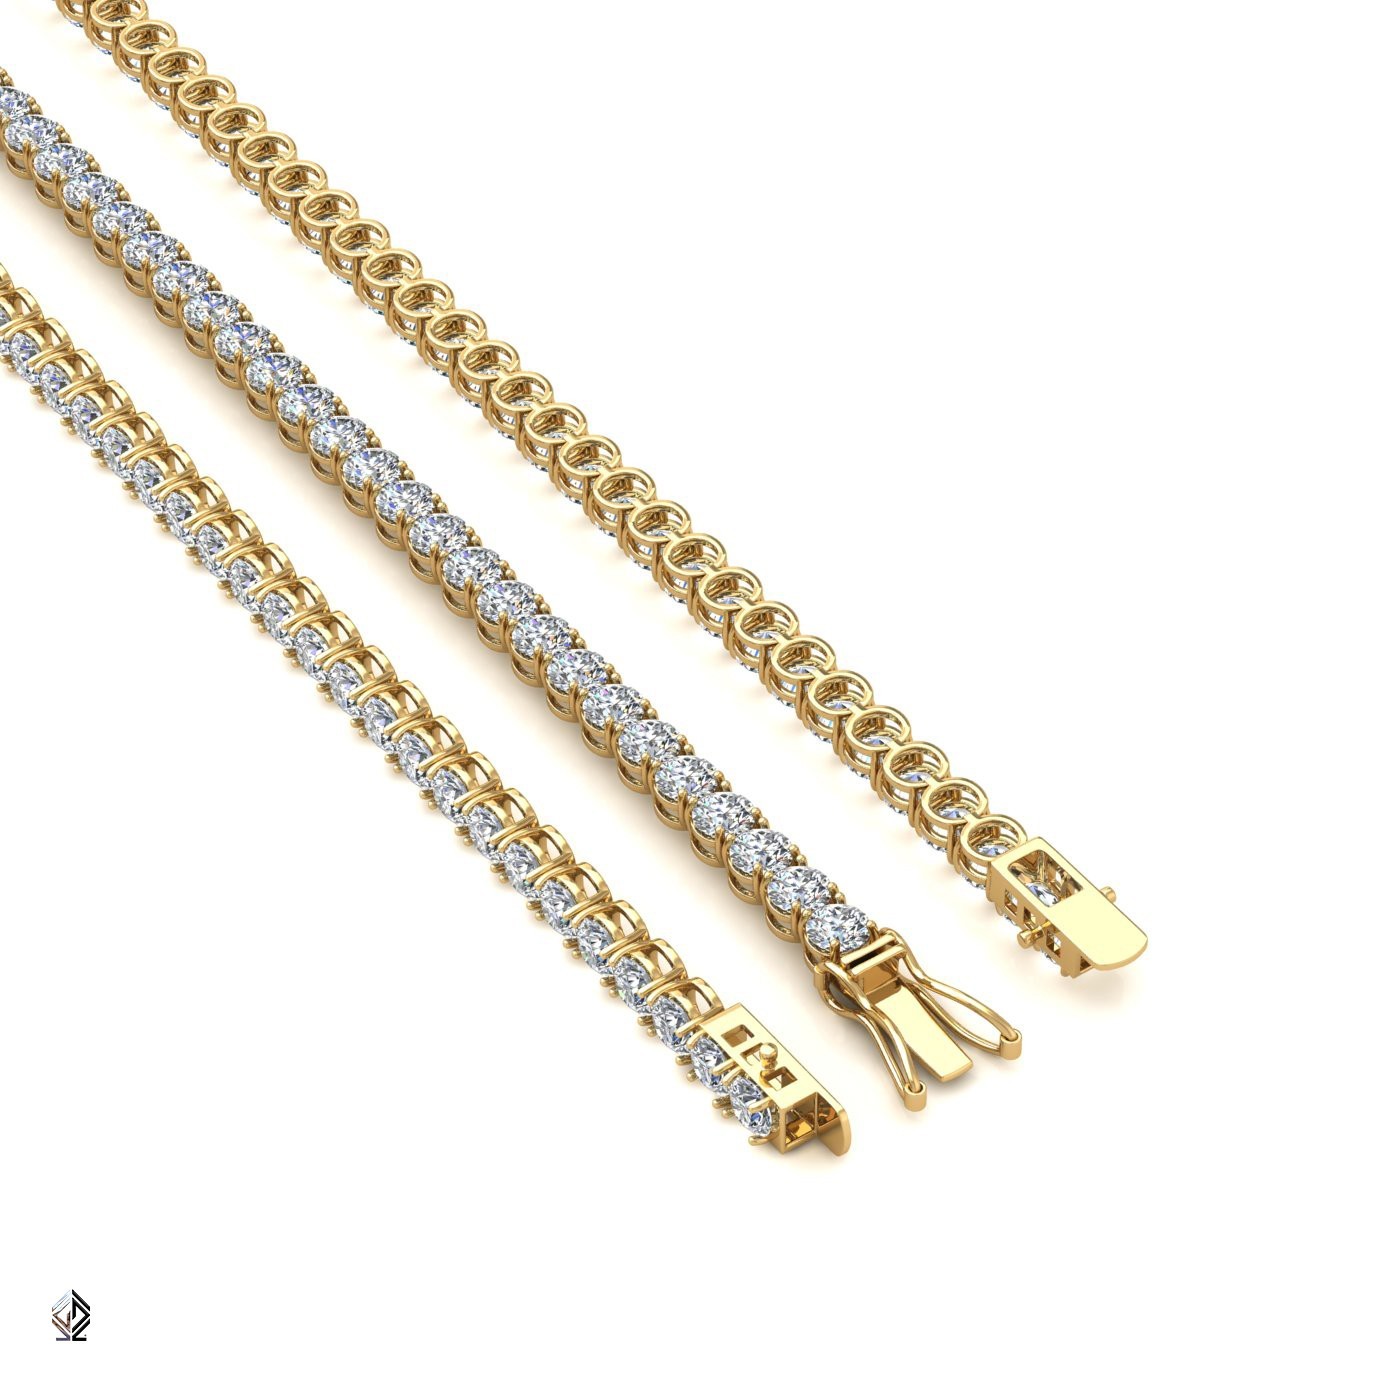 18k yellow gold  1.8mm 4 prong round shape diamond tennis bracelet in round setting